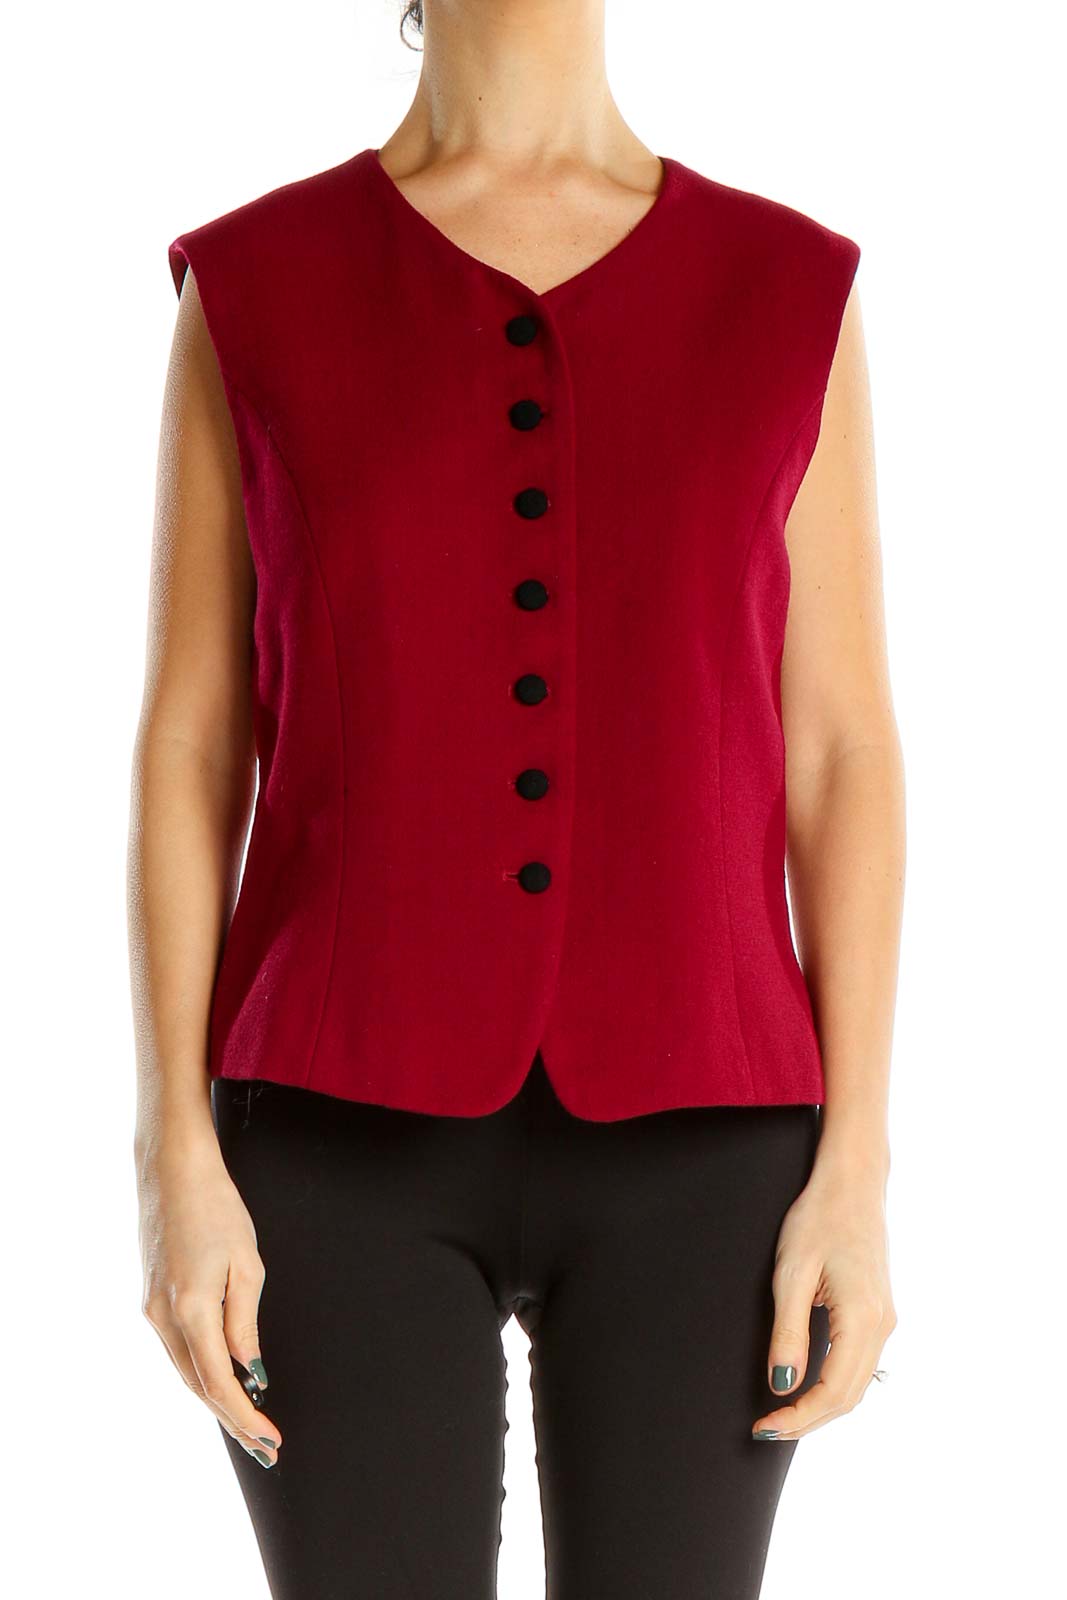 Red Woven Vintage Vest Top Front